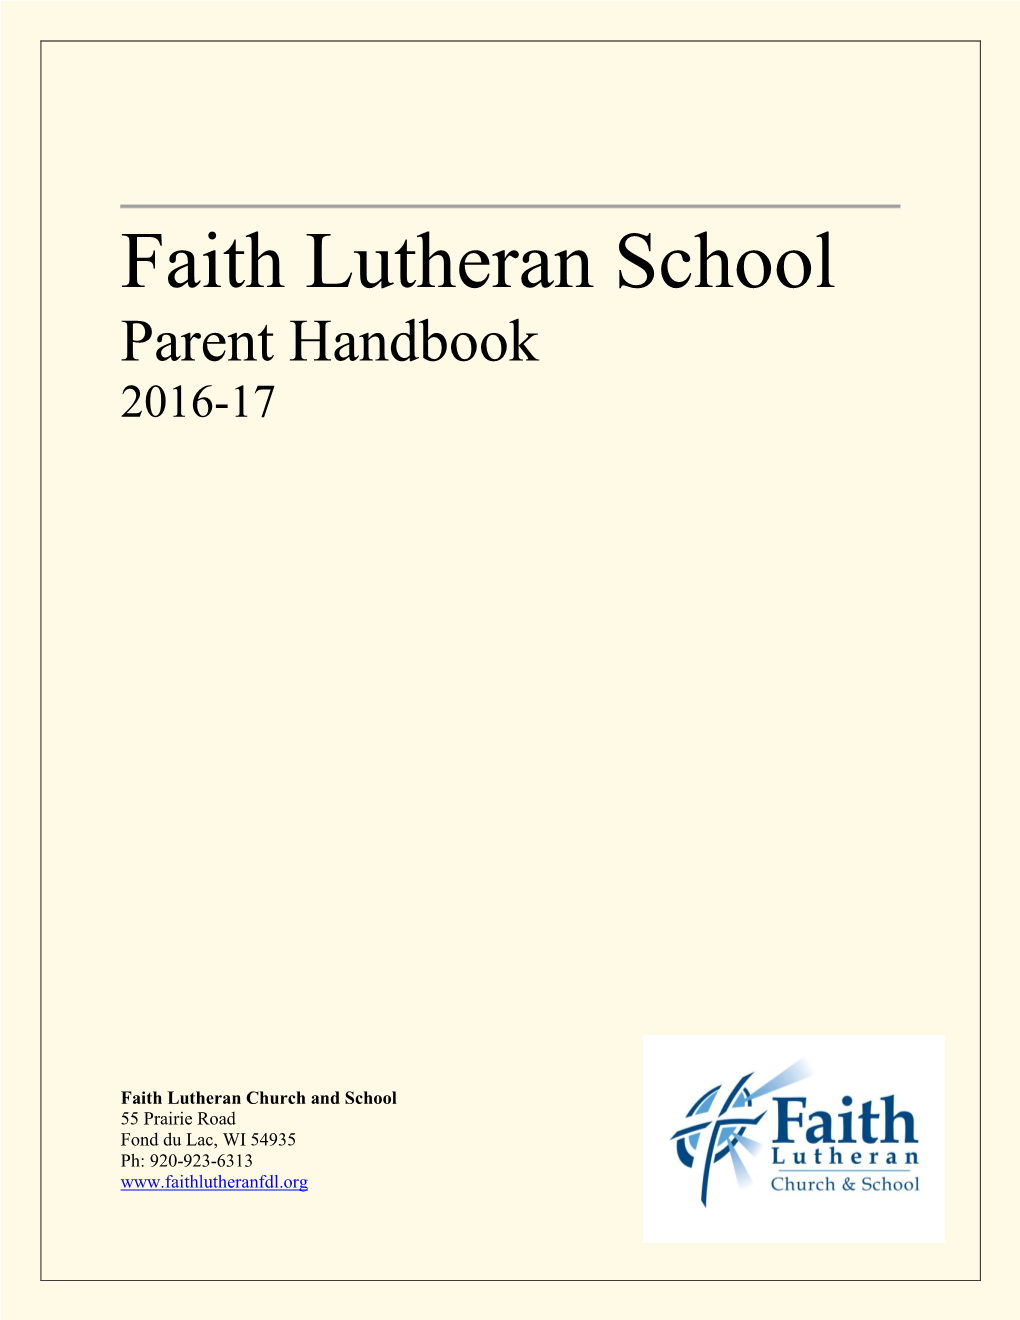 Faith Lutheran School Parent Handbook 2016-17